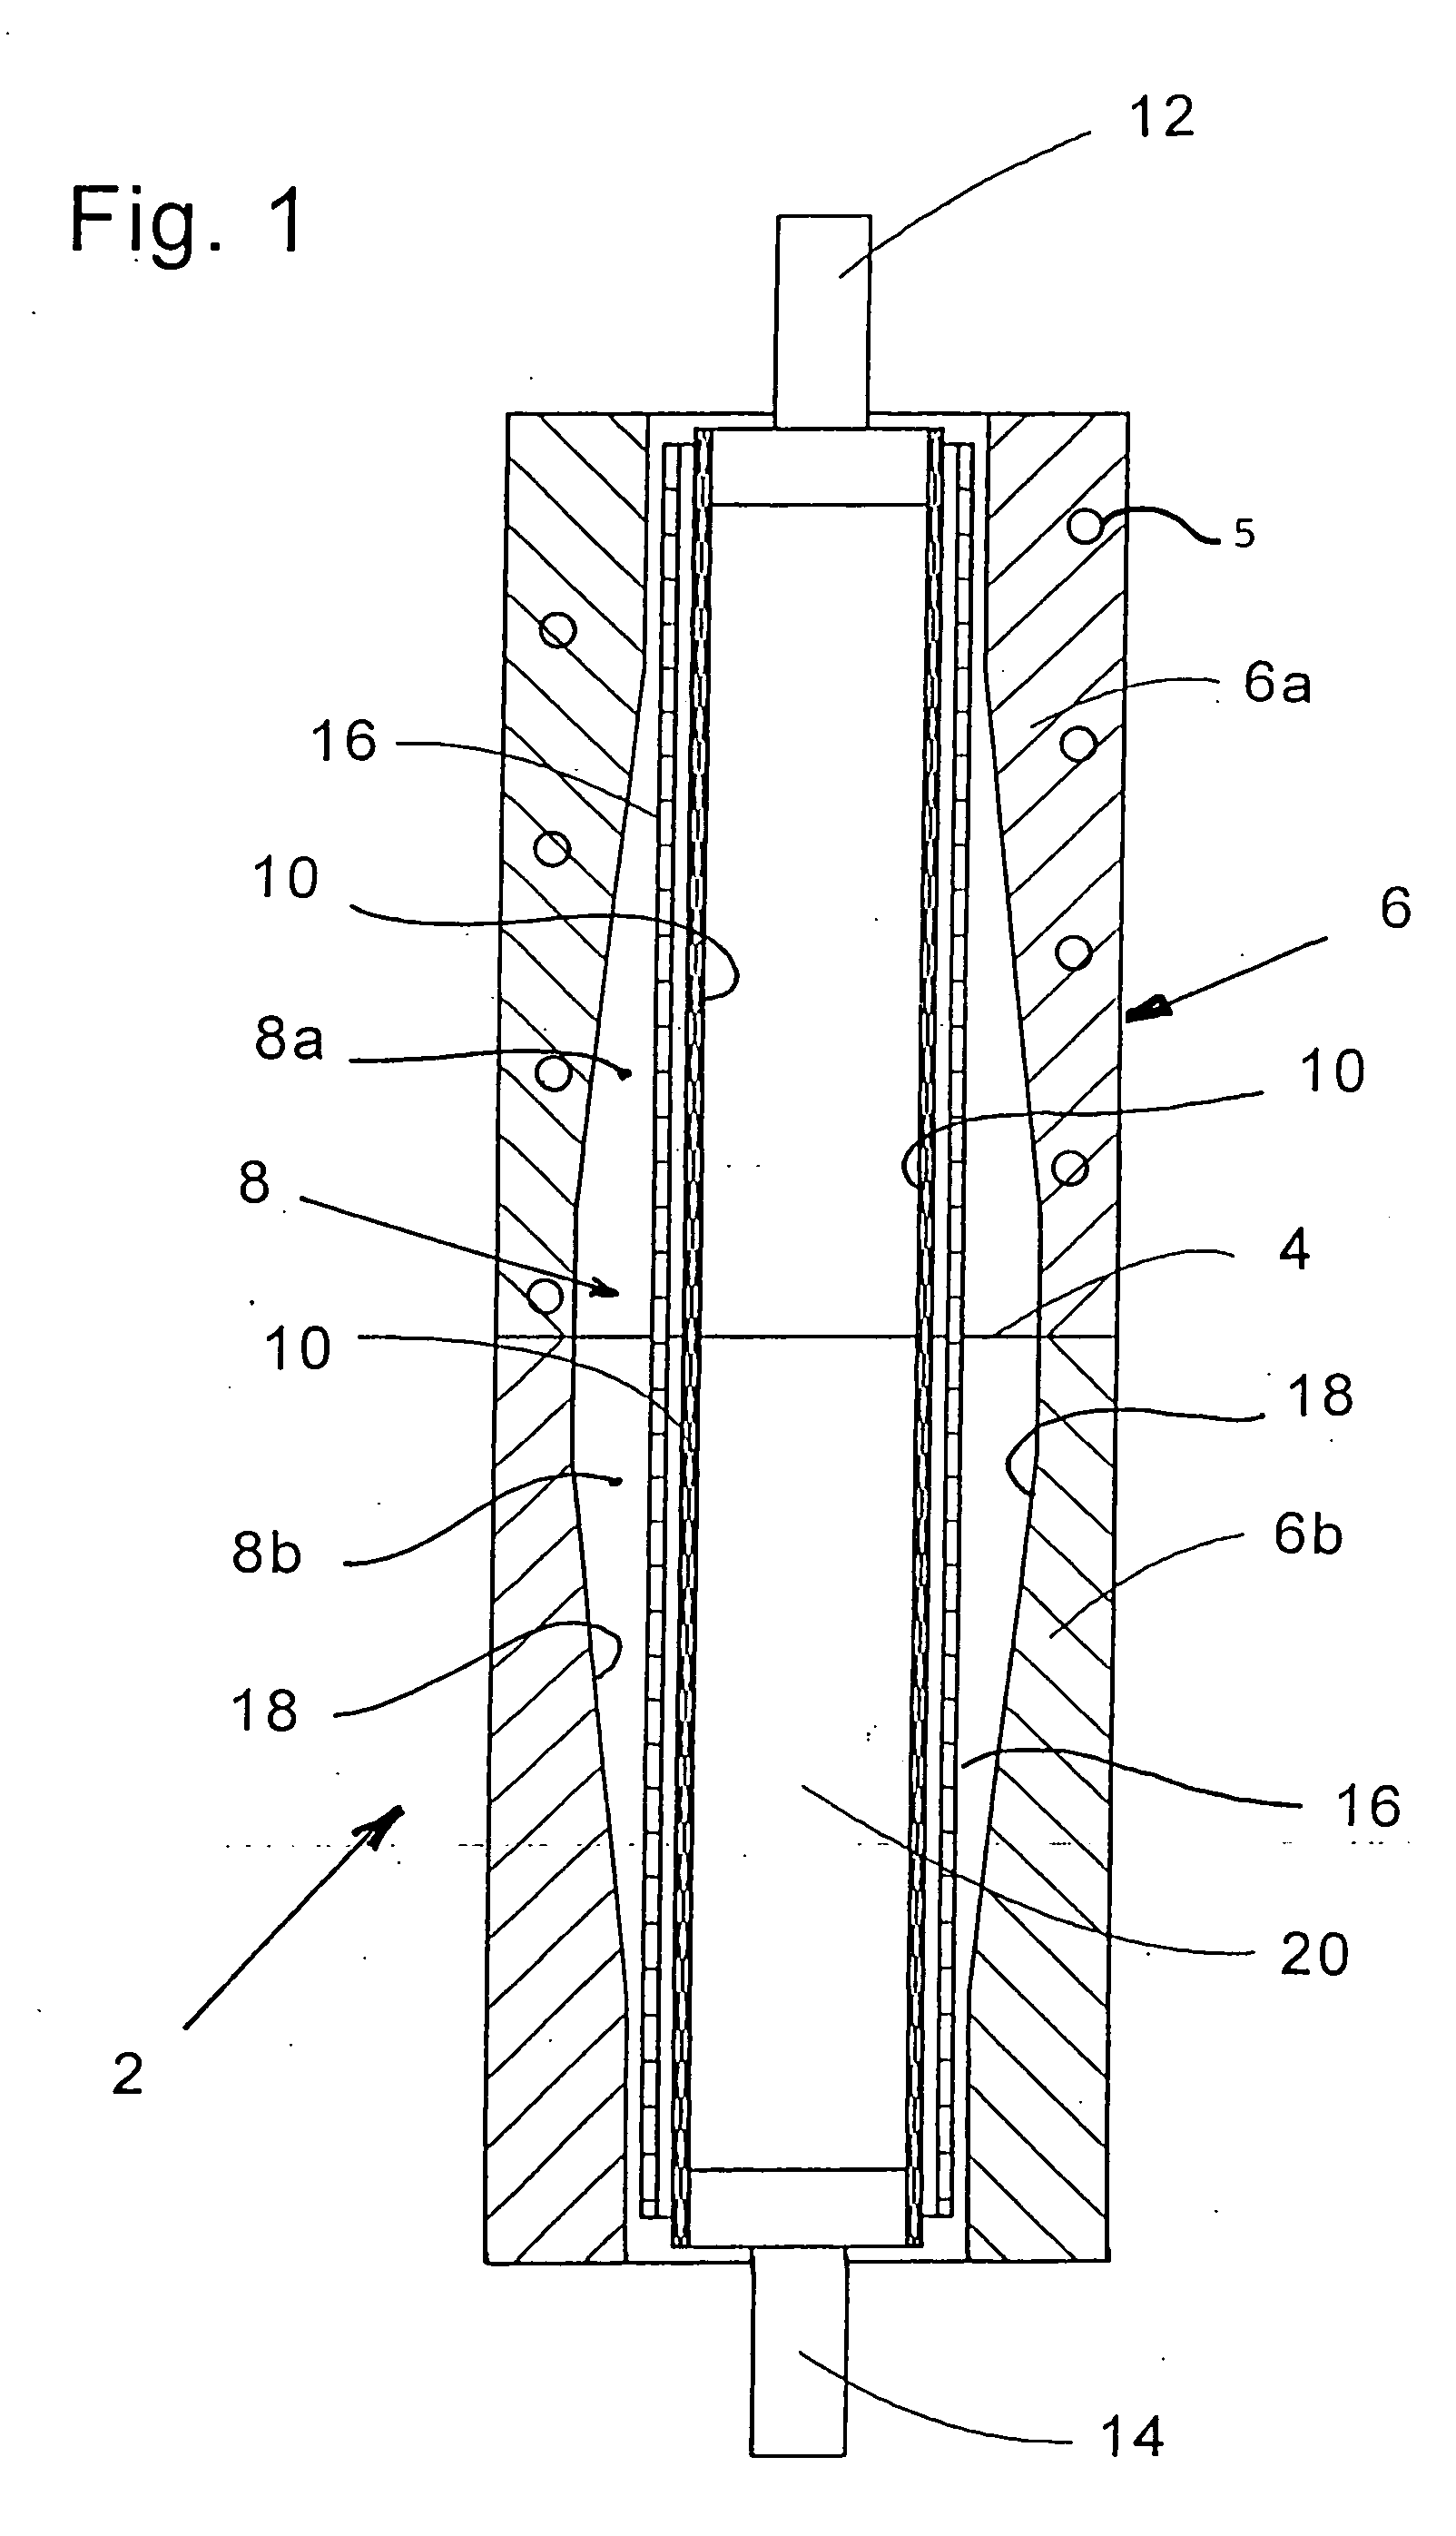 Apparatus for forming an air spring flexible member